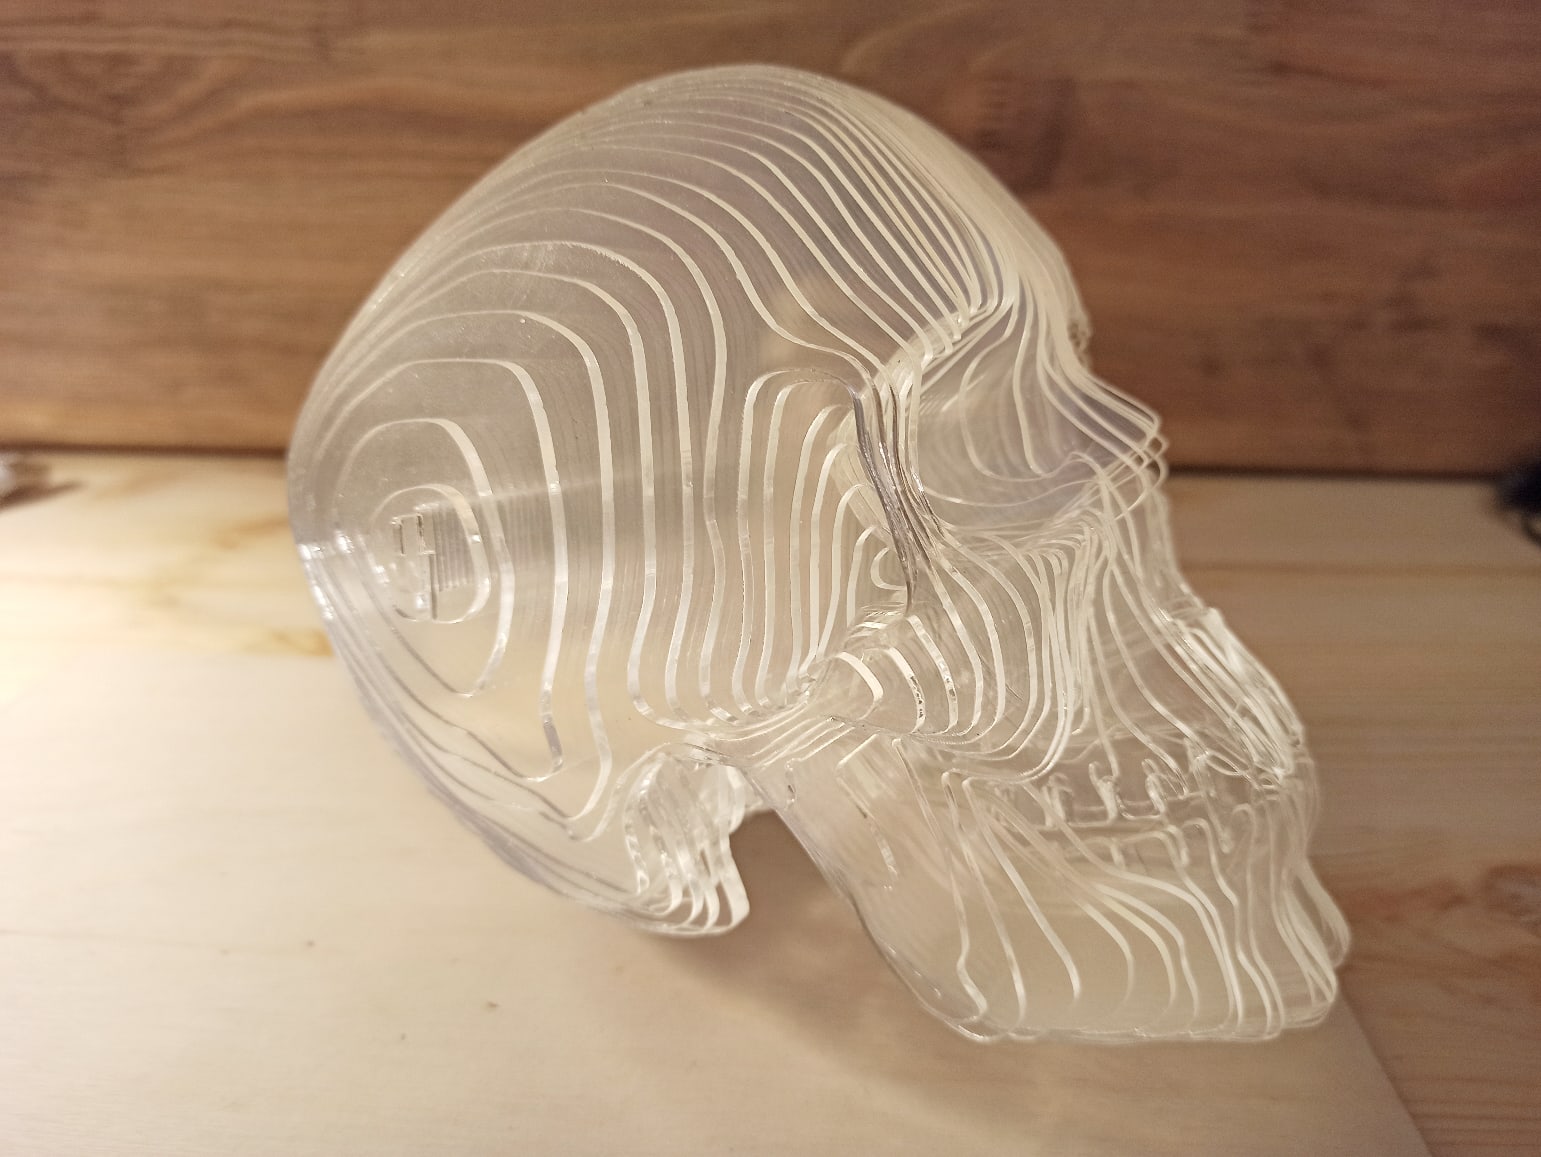 Modelo de crânio 3D acrílico cortado a laser